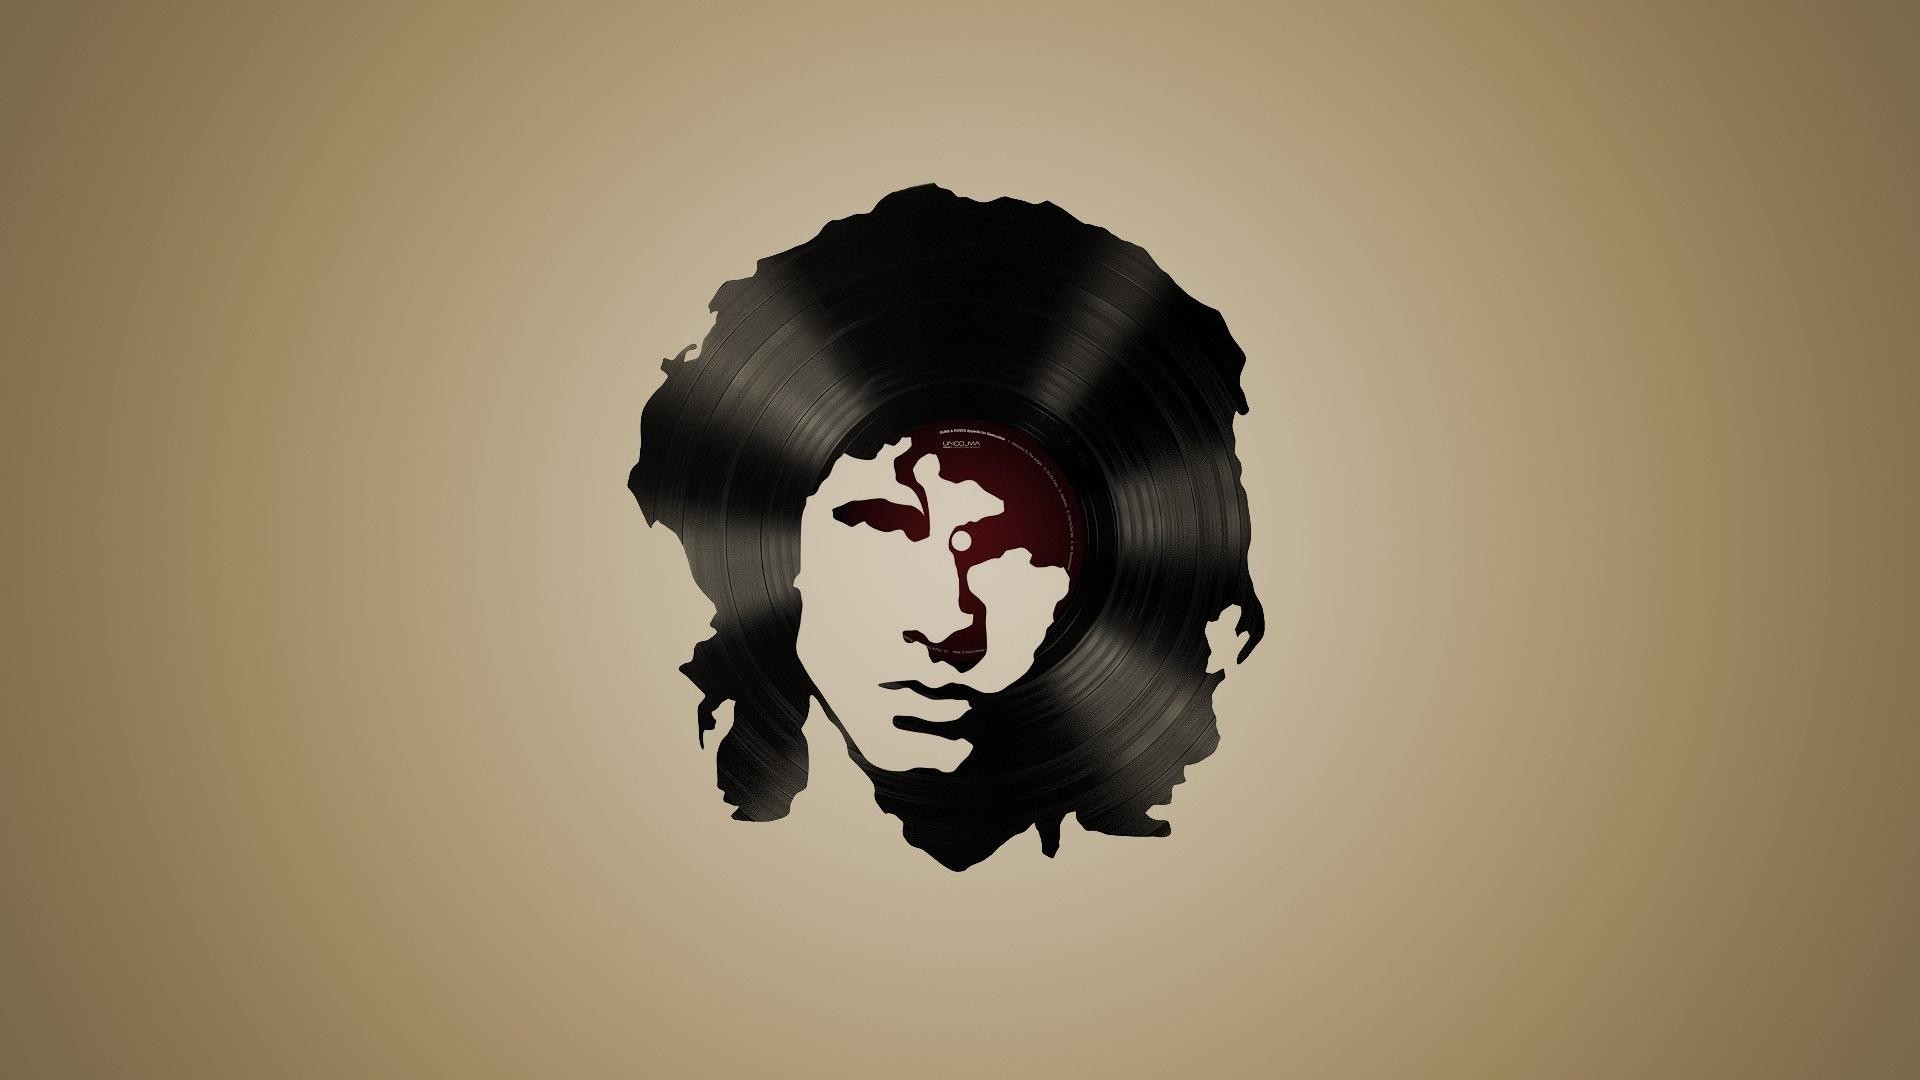 Digital Art Simple Background Minimalism Men Face Vinyl The Doors Jim Morrison Singer Musician Legen 1920x1080